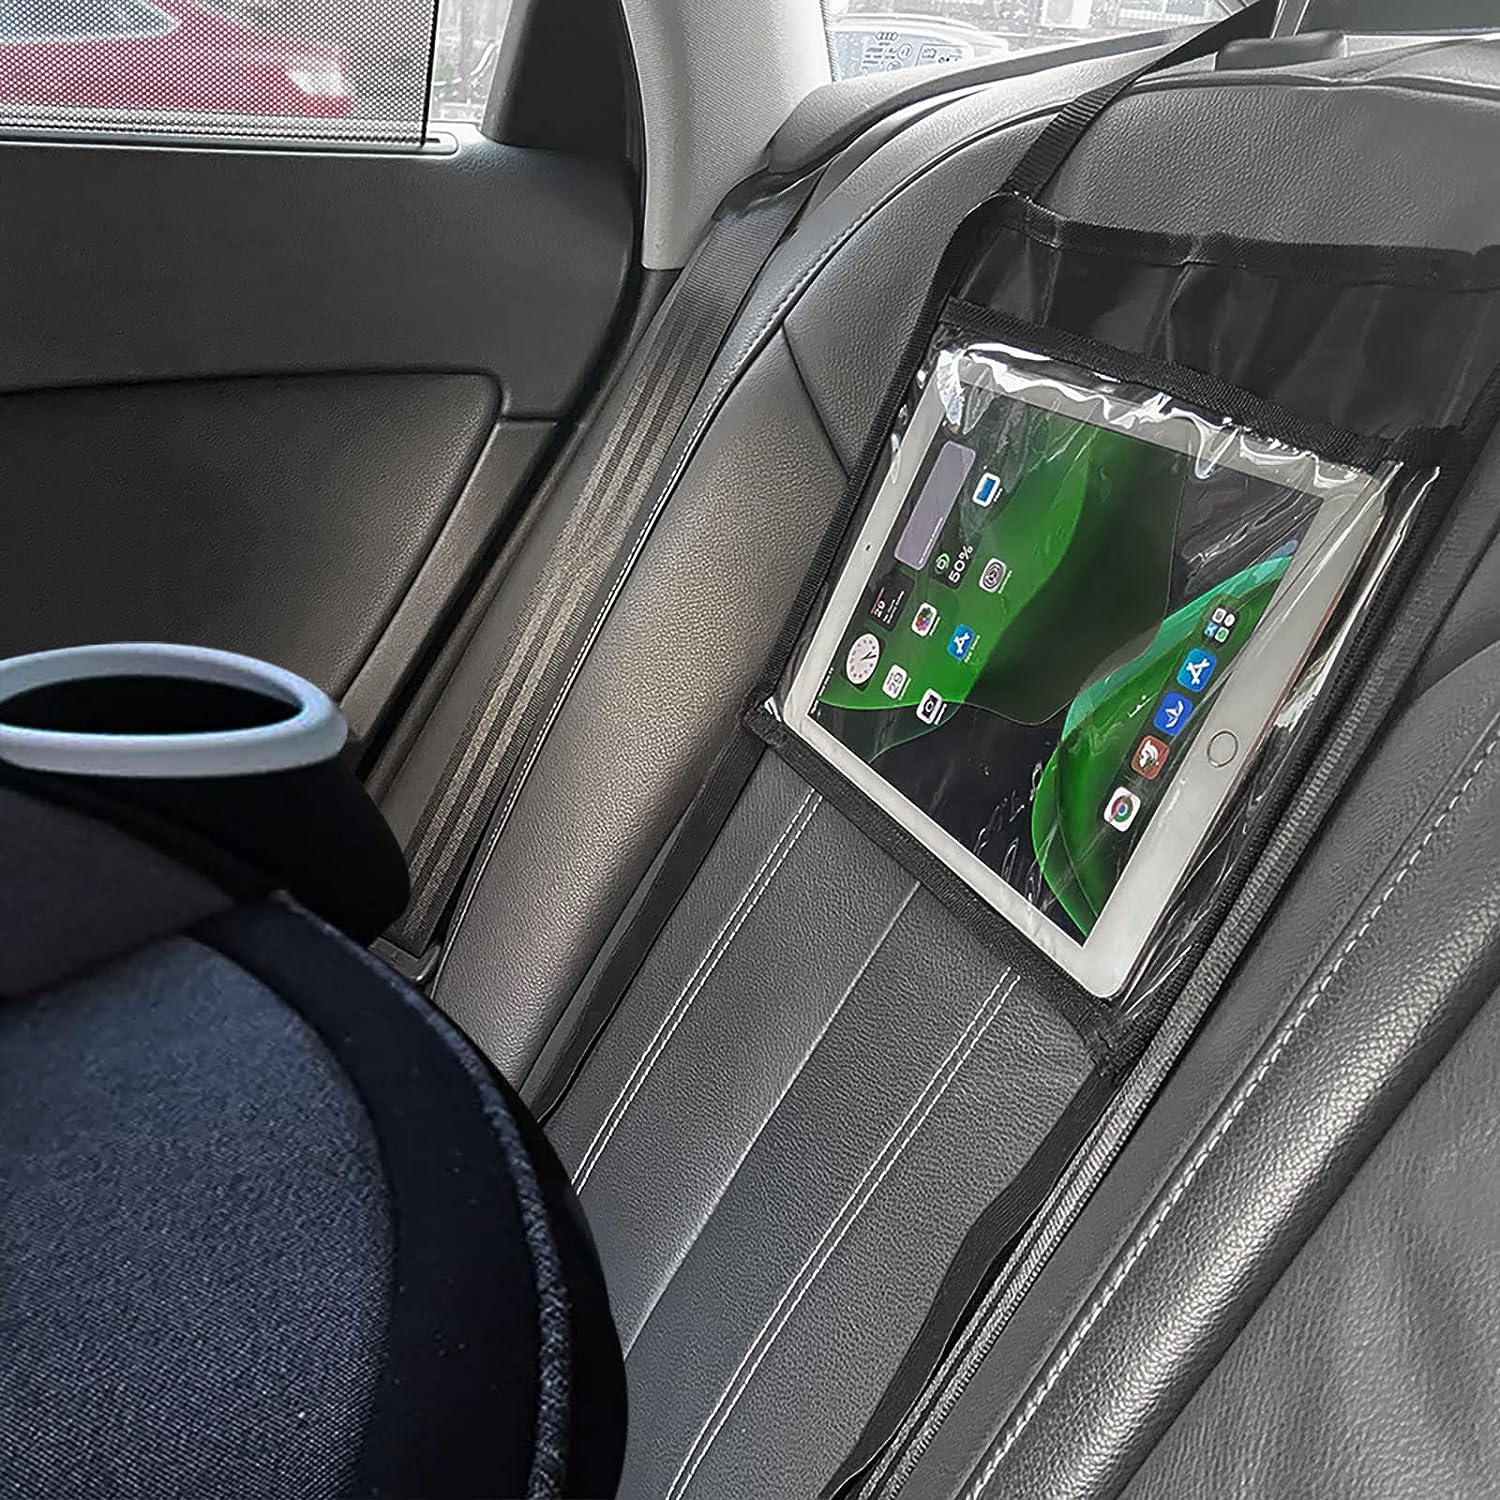 FresherAcc Car iPad Tablet Holder Review